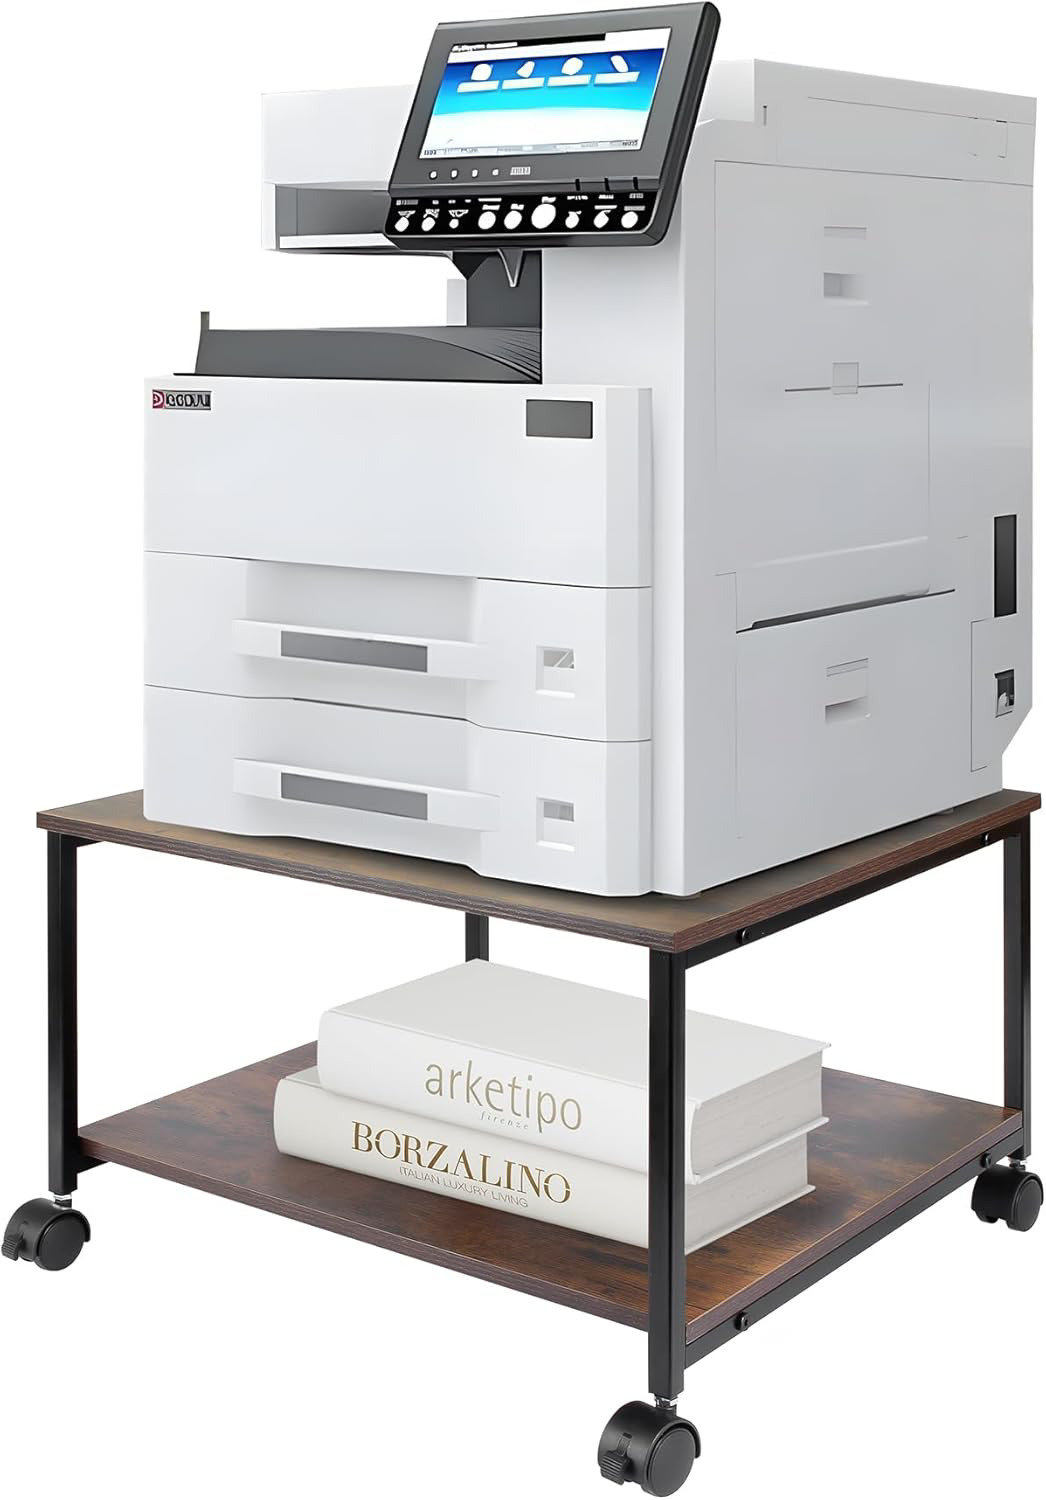 EMERIT Printer Stand,19.5''x19.5''x12.8'' 2 Tier Large Printer Laser Table Heavy